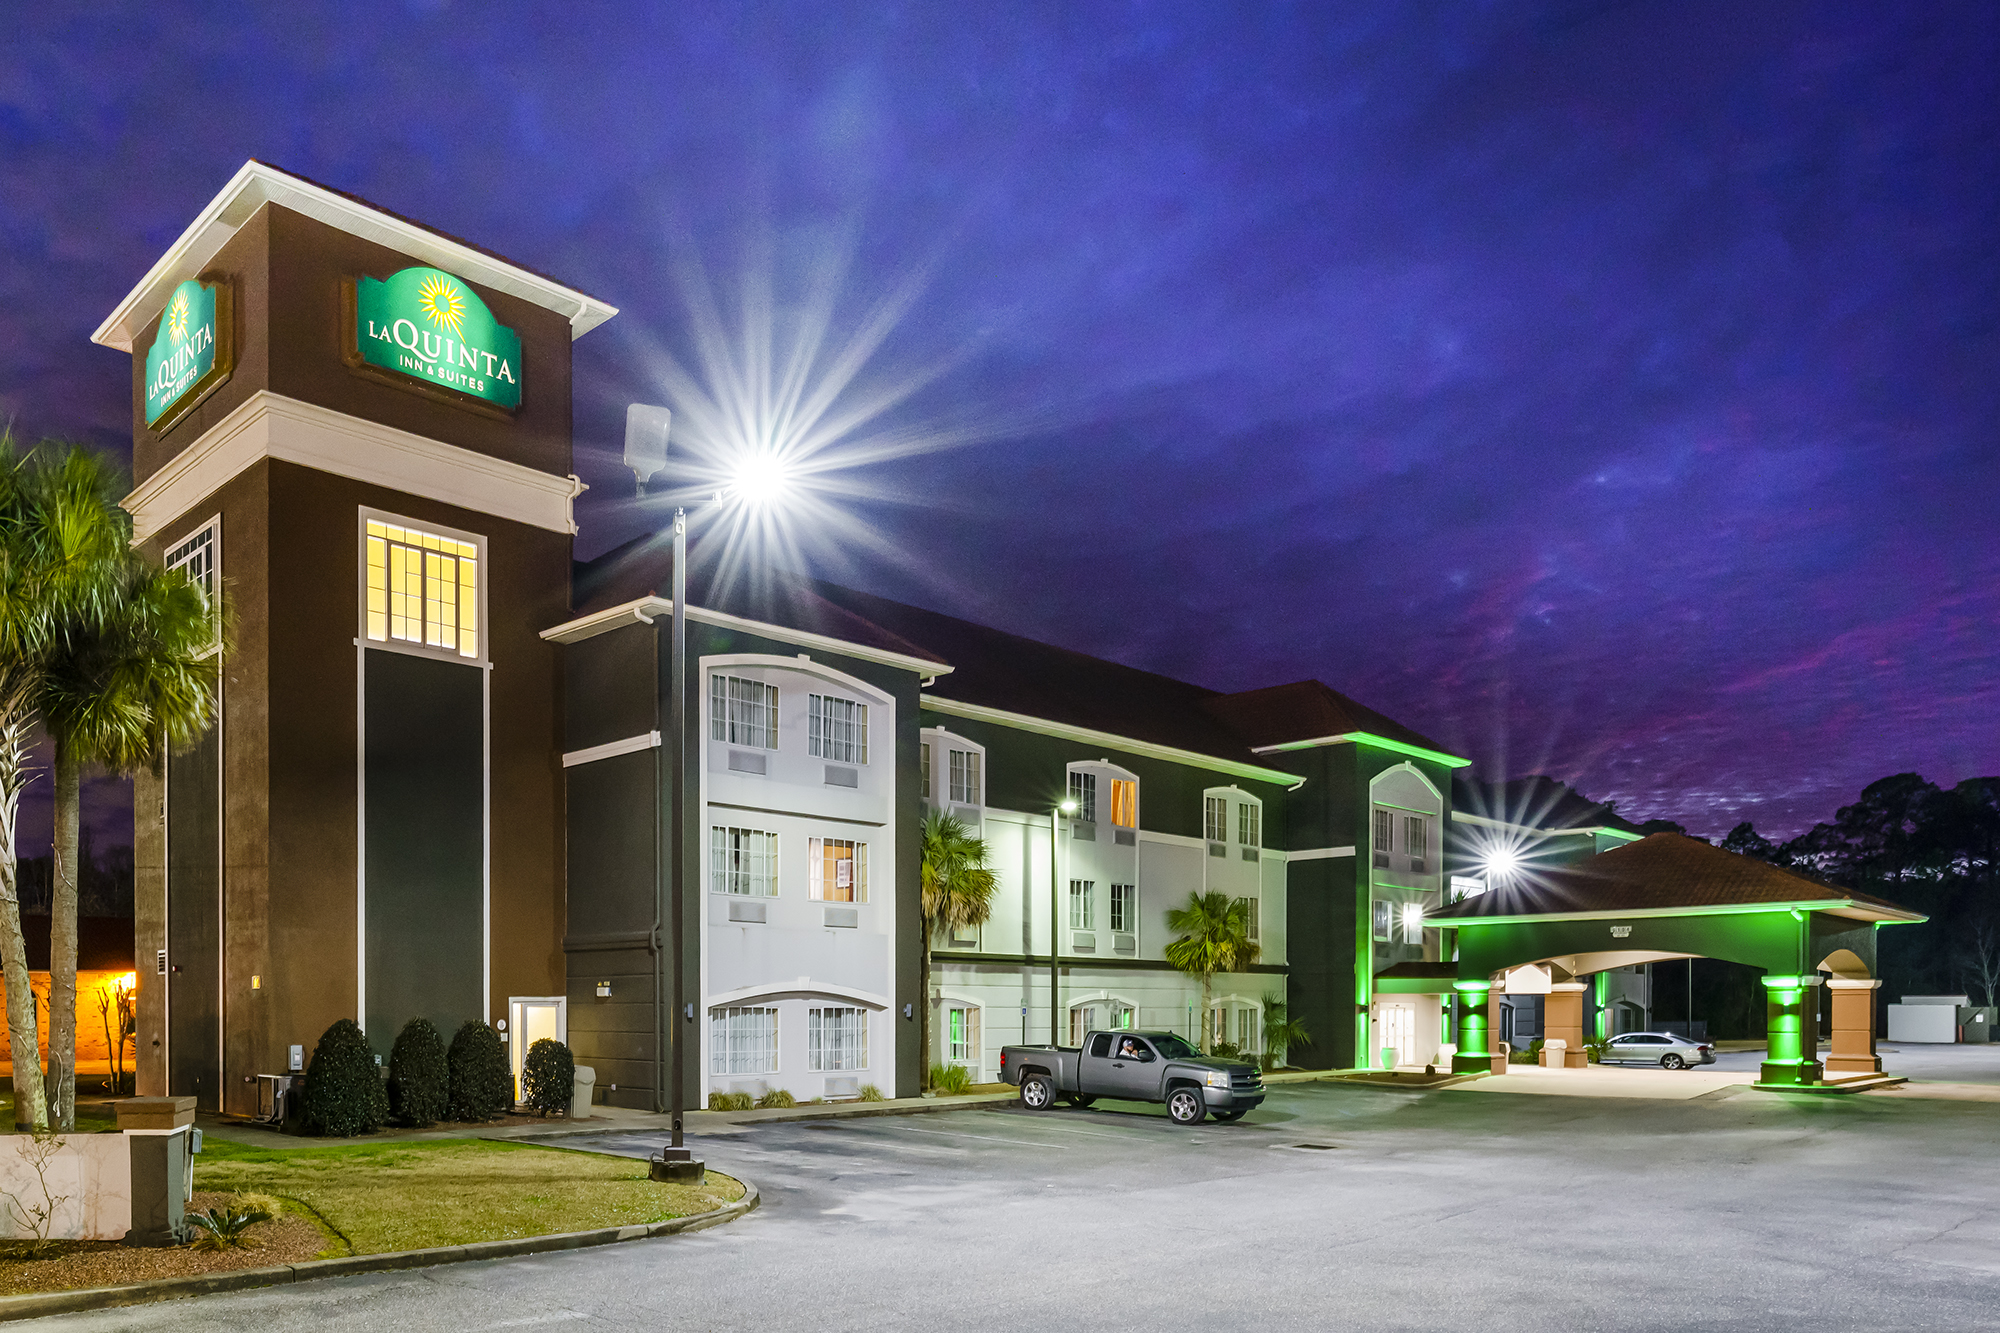 Marcus & Millichap: Brokers Sale of 79-Room La Quinta Inn & Suites in Satsuma, Alabama